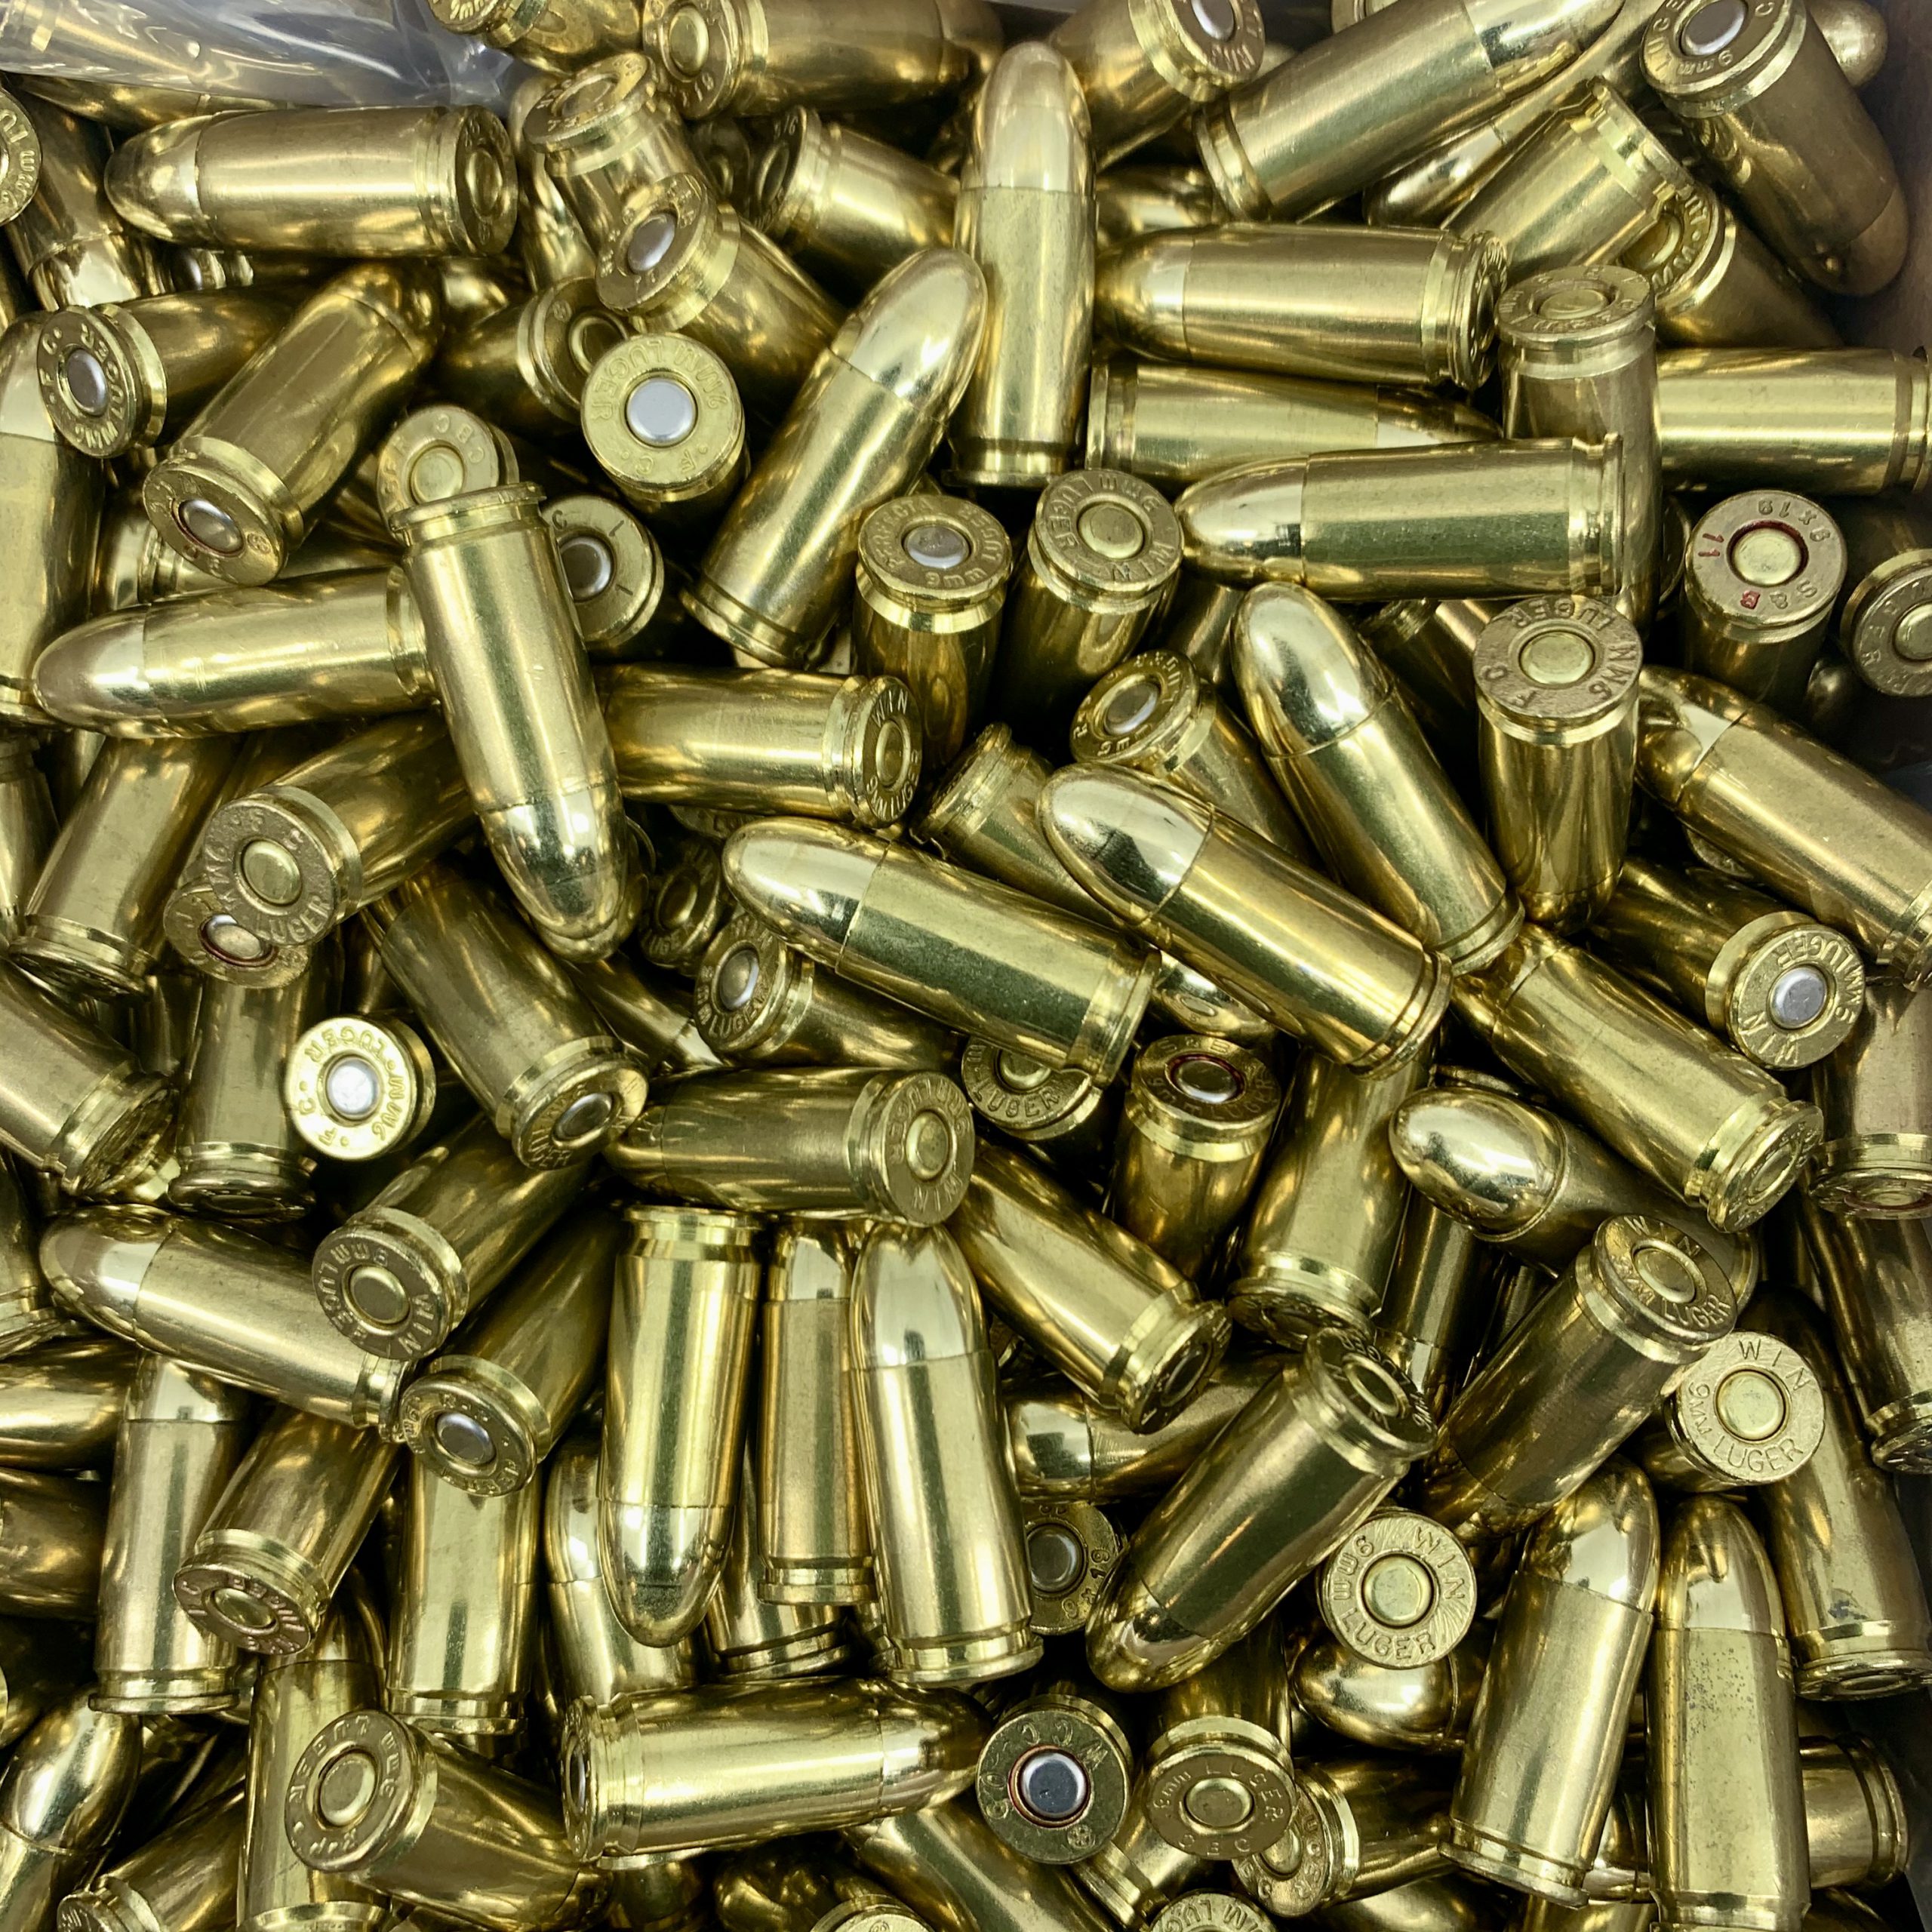 Grain rounds. 9mm Ammo. Патрон Люгер Тарков. Ammo 9mm Case. Валюта Люгера в мм2 золотого.